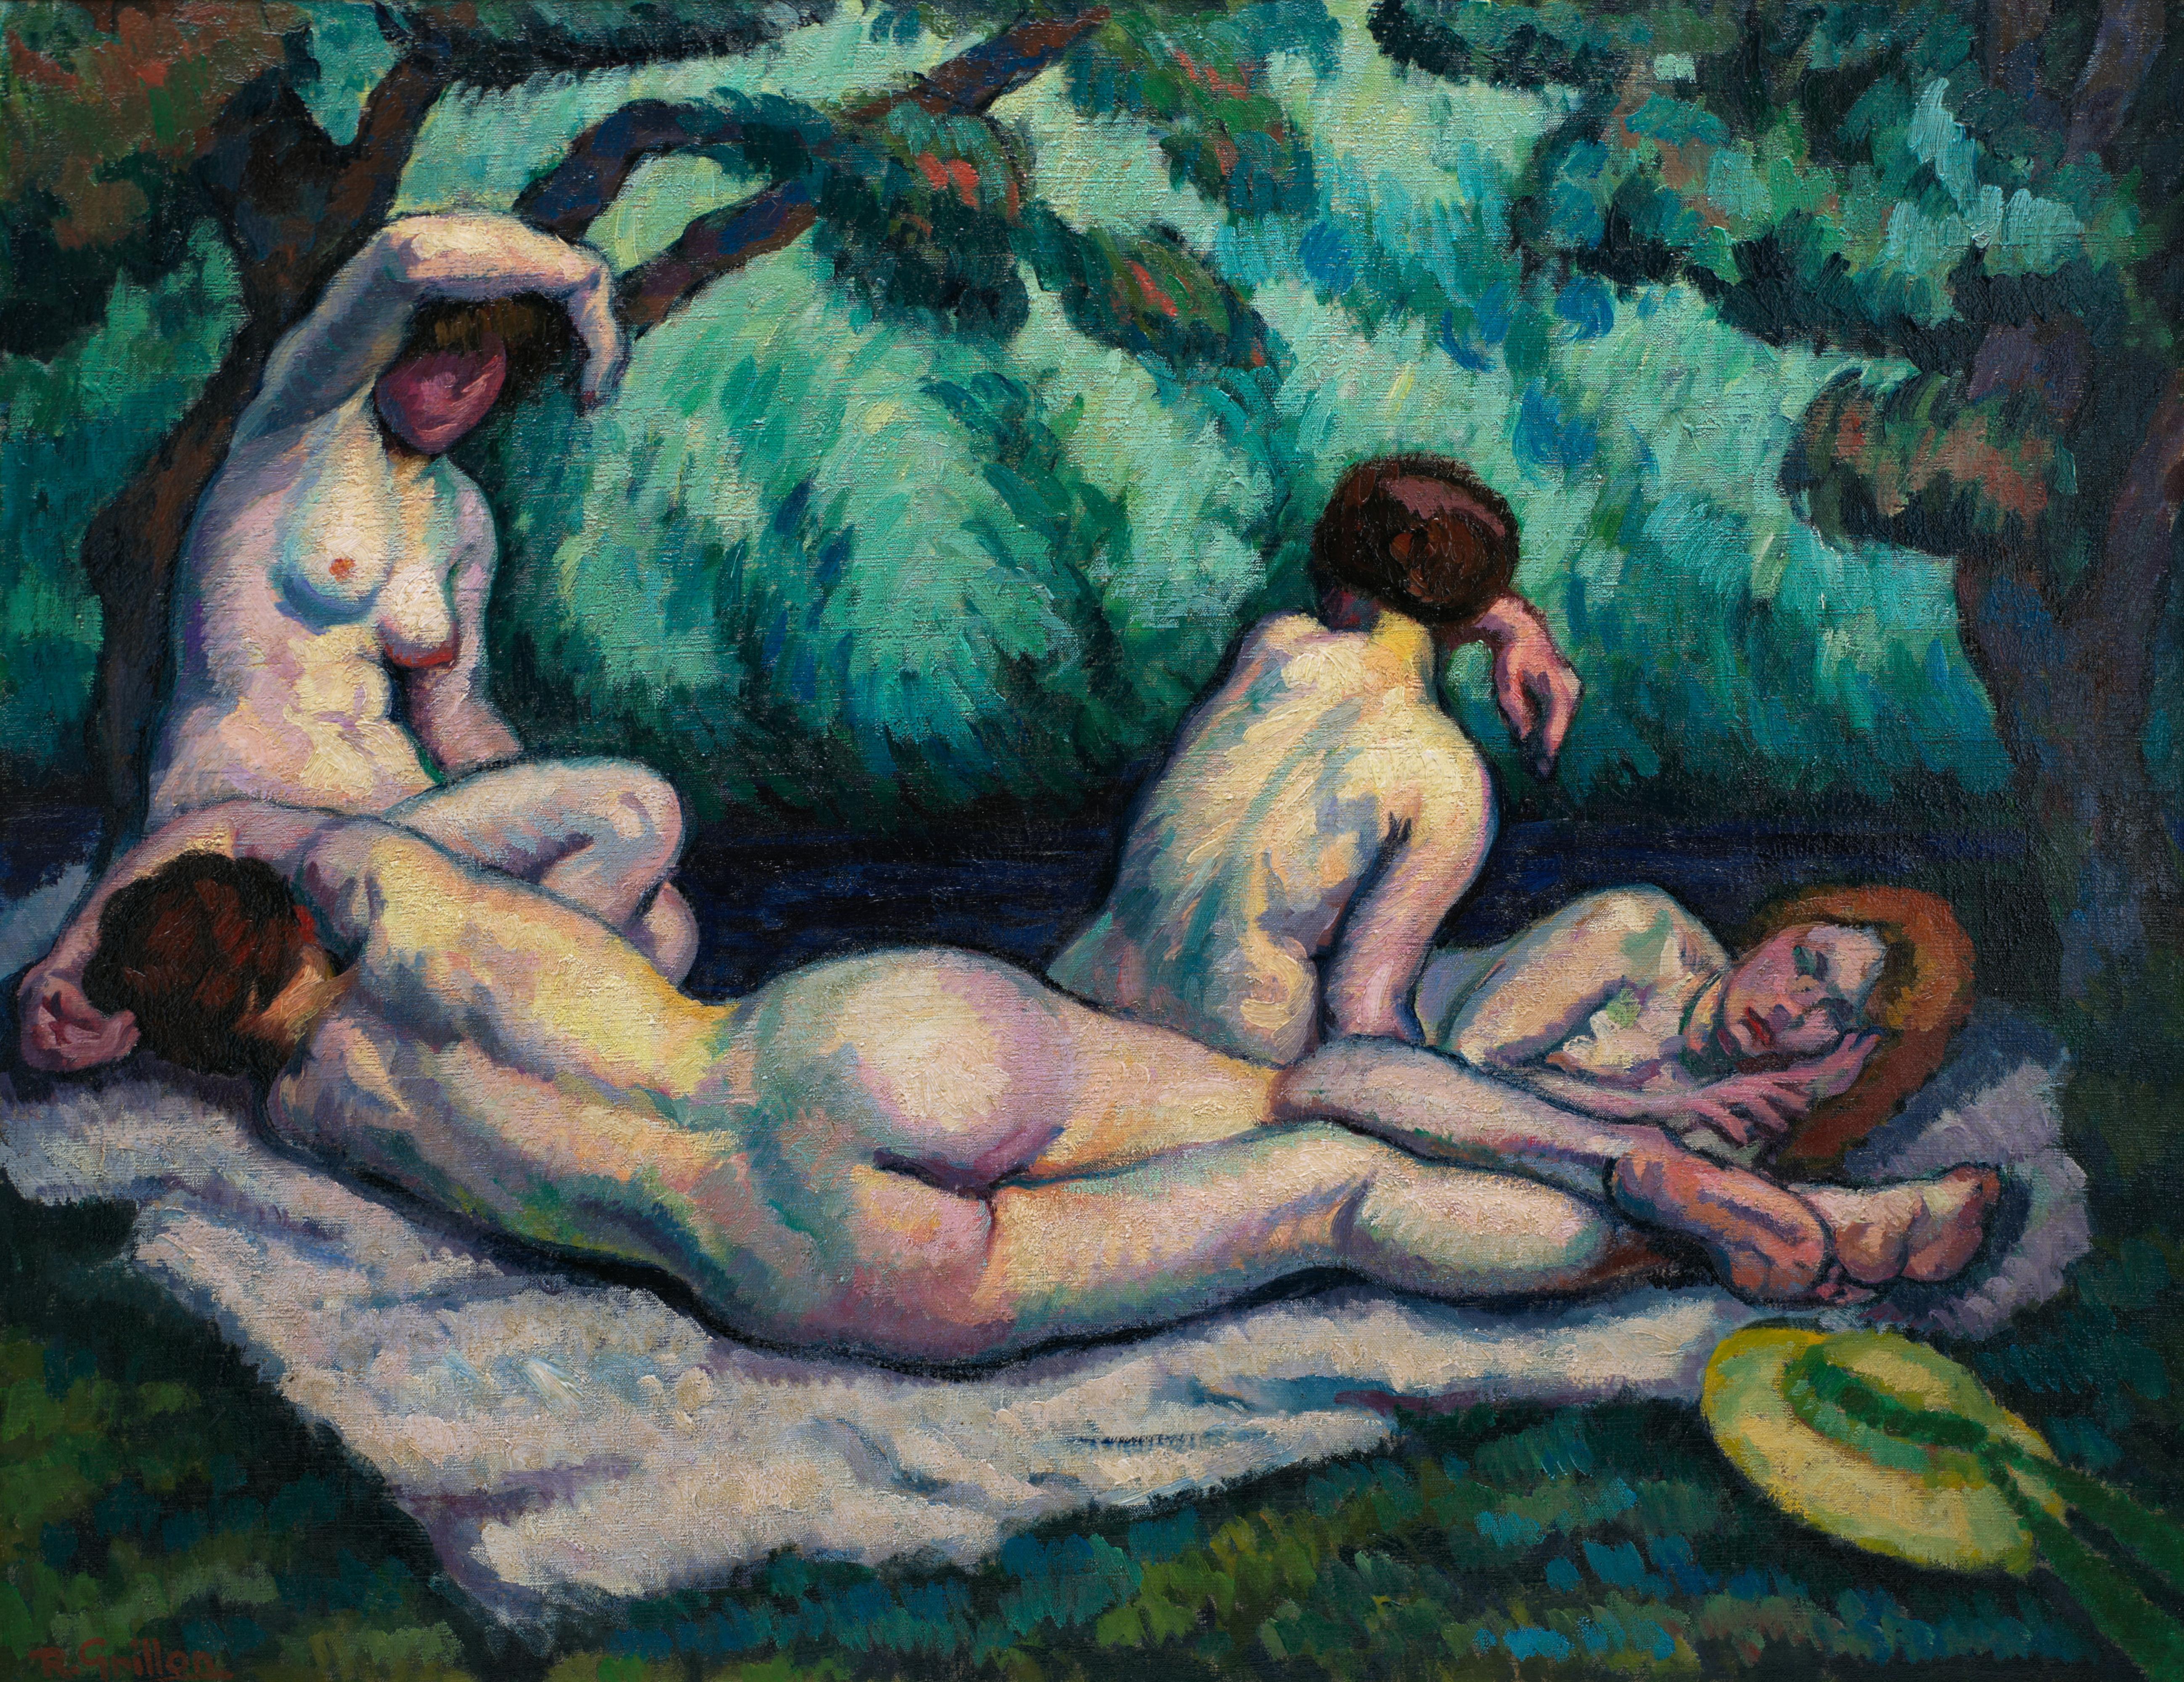 Bathers, Öl auf Leinwand, 1914 – Painting von Roger Grillon